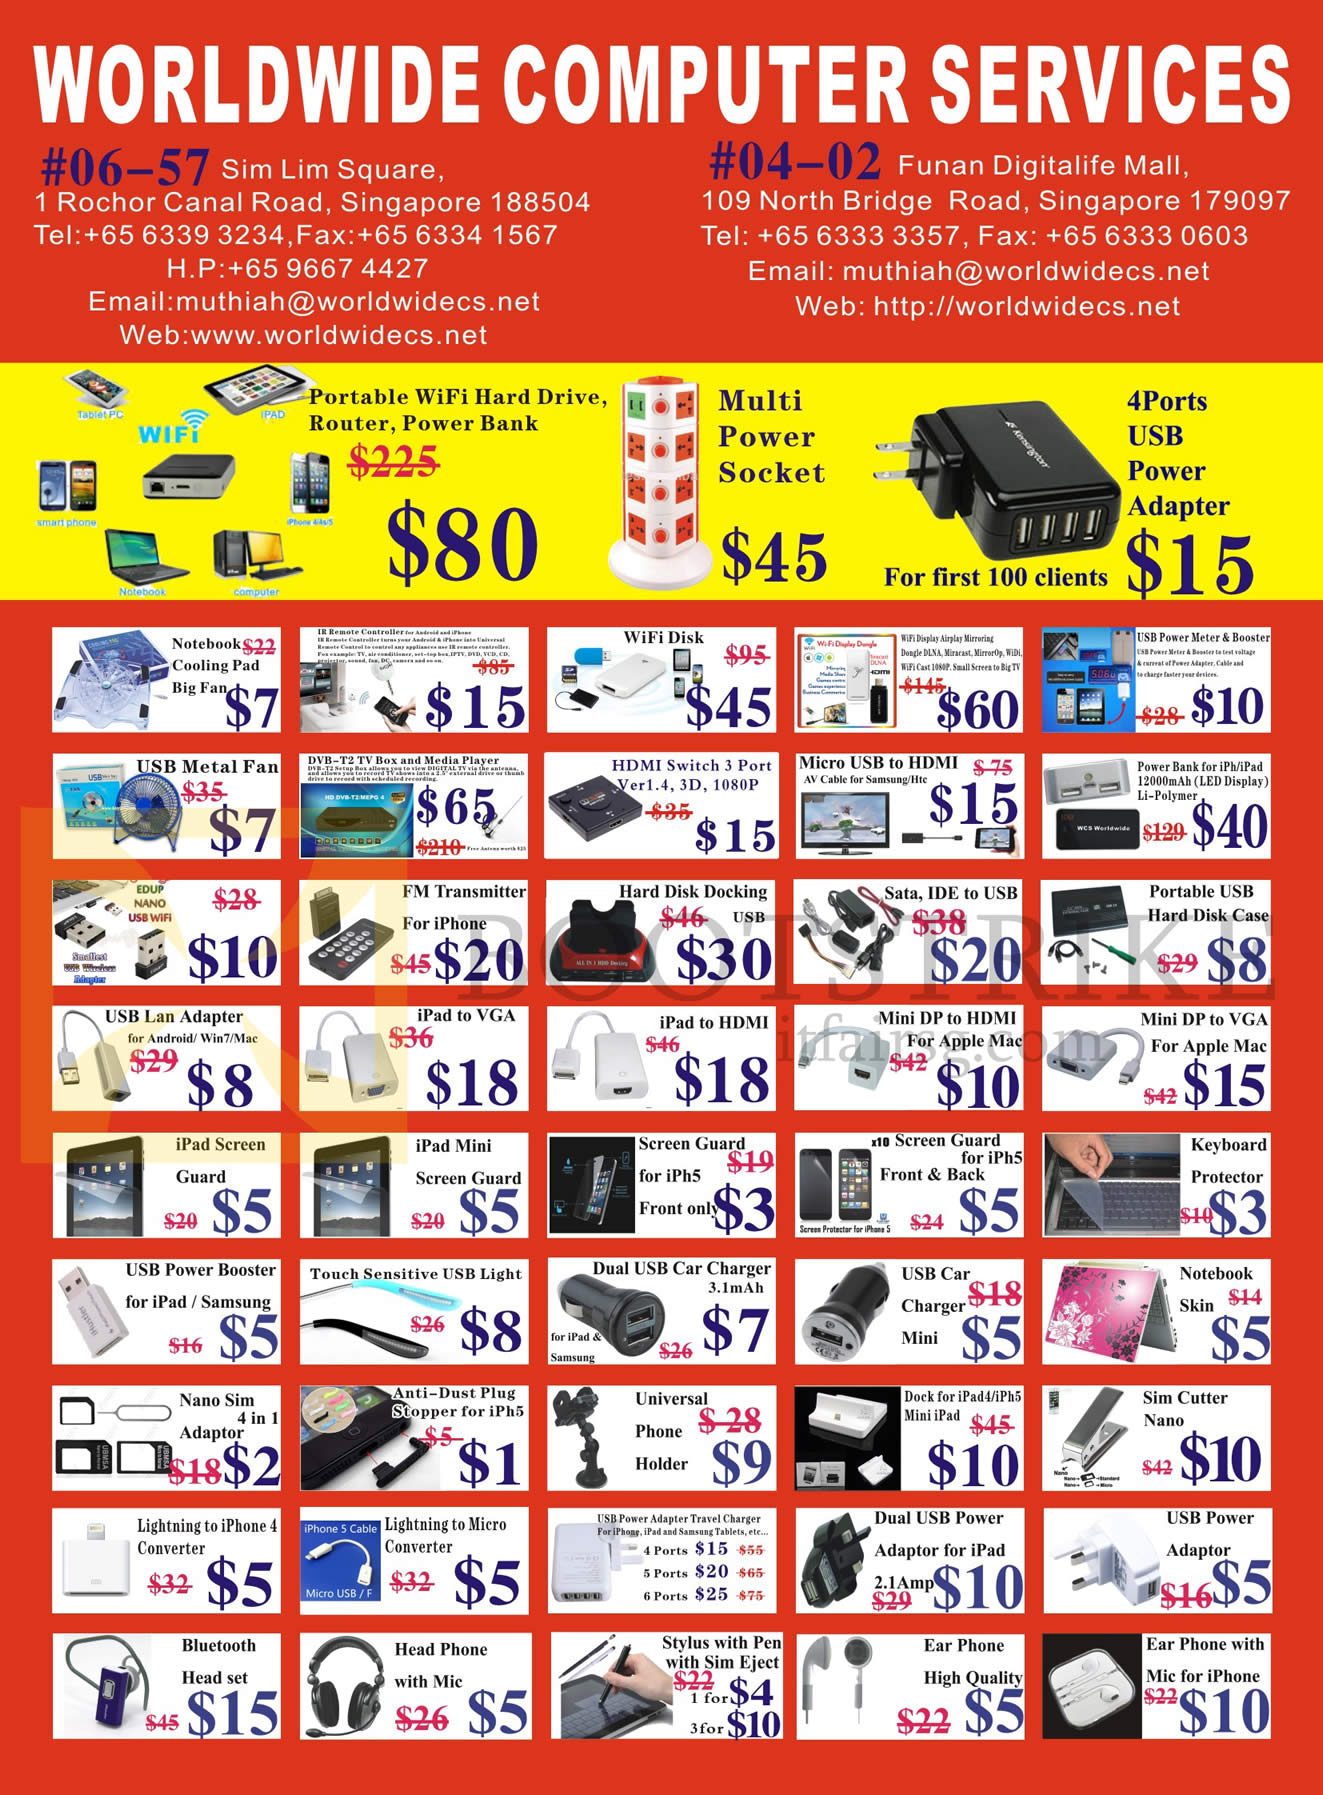 SITEX 2014 price list image brochure of Worldwide Computer Services Accessories Cooling Fan, Mini DP, Hard Disk Docking, USB Lan Adapter, IPad Screen Protector, Headphone, Bluetooth, Earphones